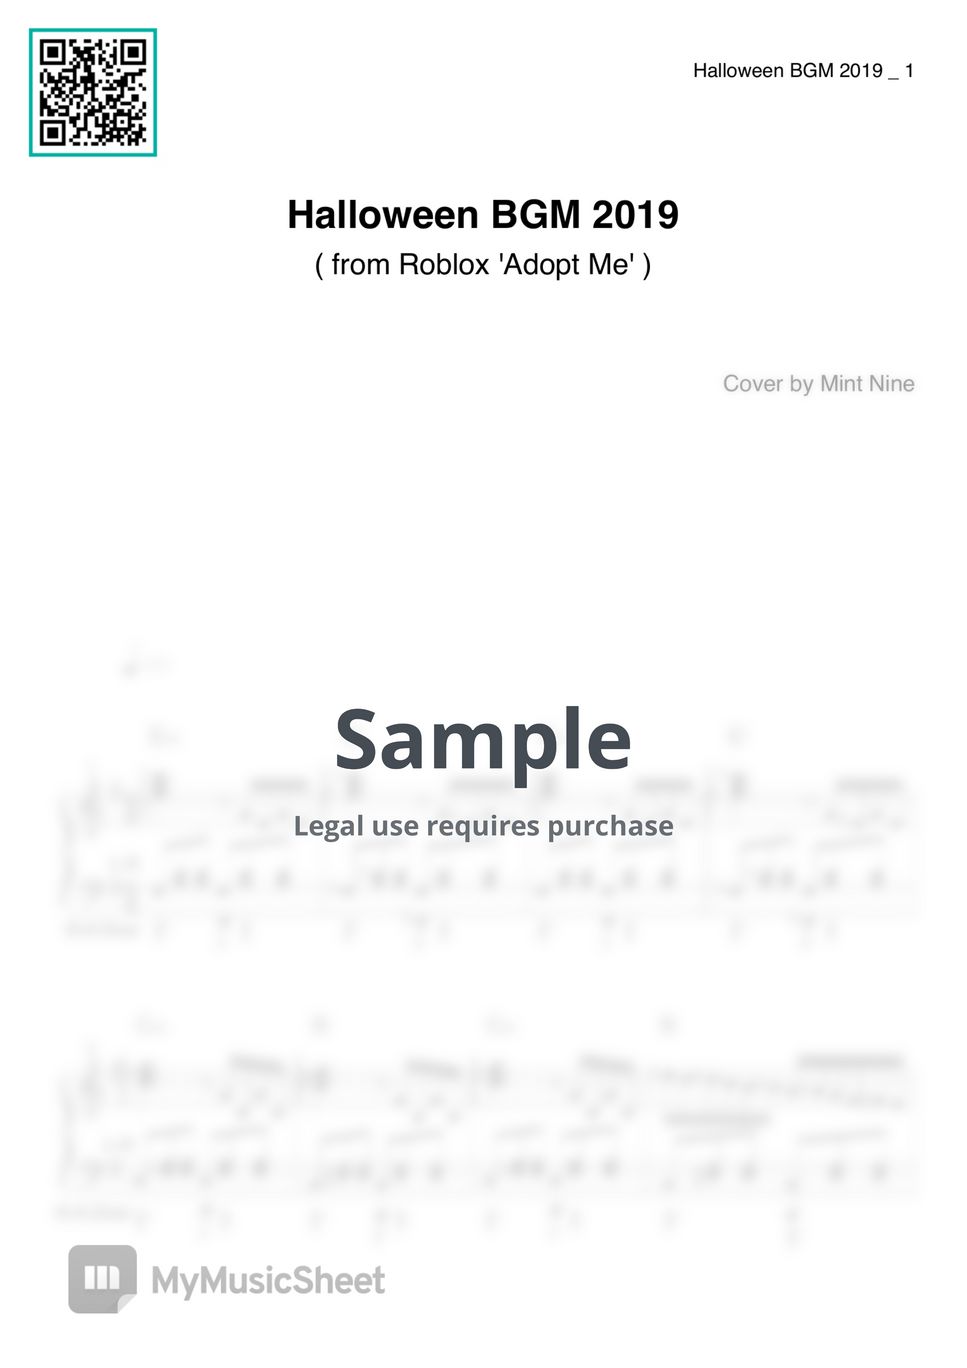 Halloween BGM - Halloween BGM 2019 by Mint Nine